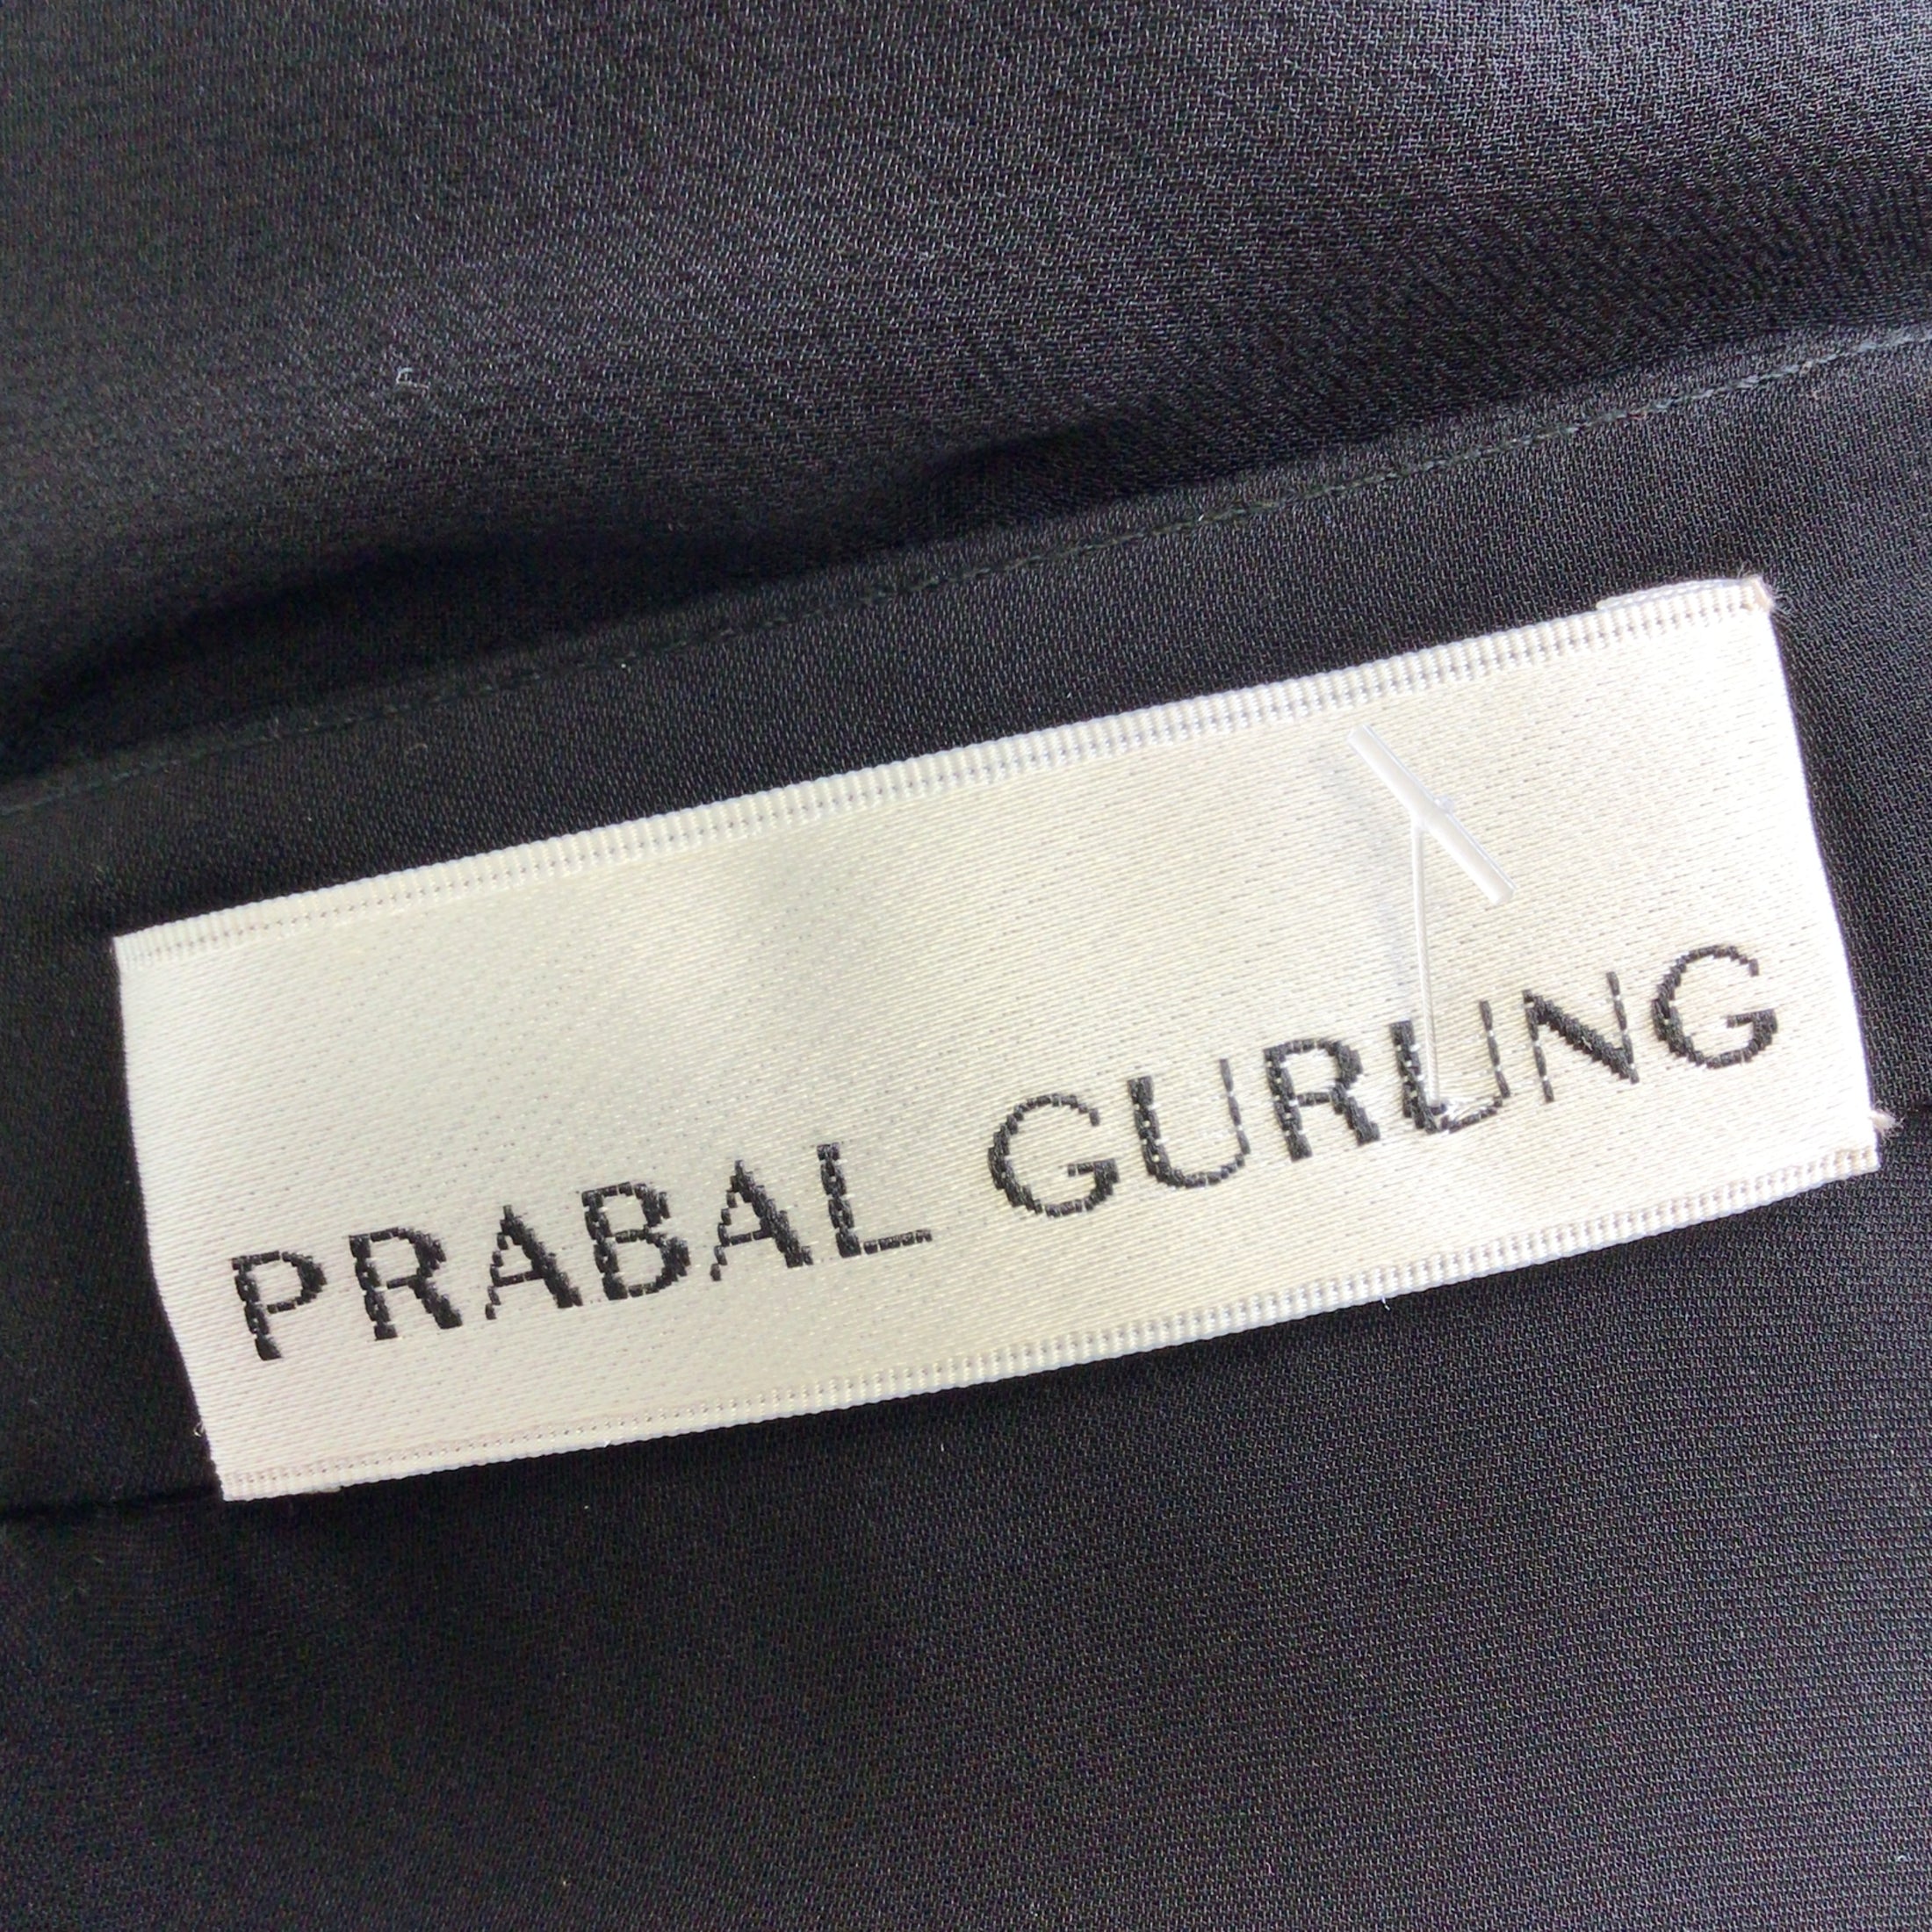 Prabal Gurung Black Silk Chiffon Skirt